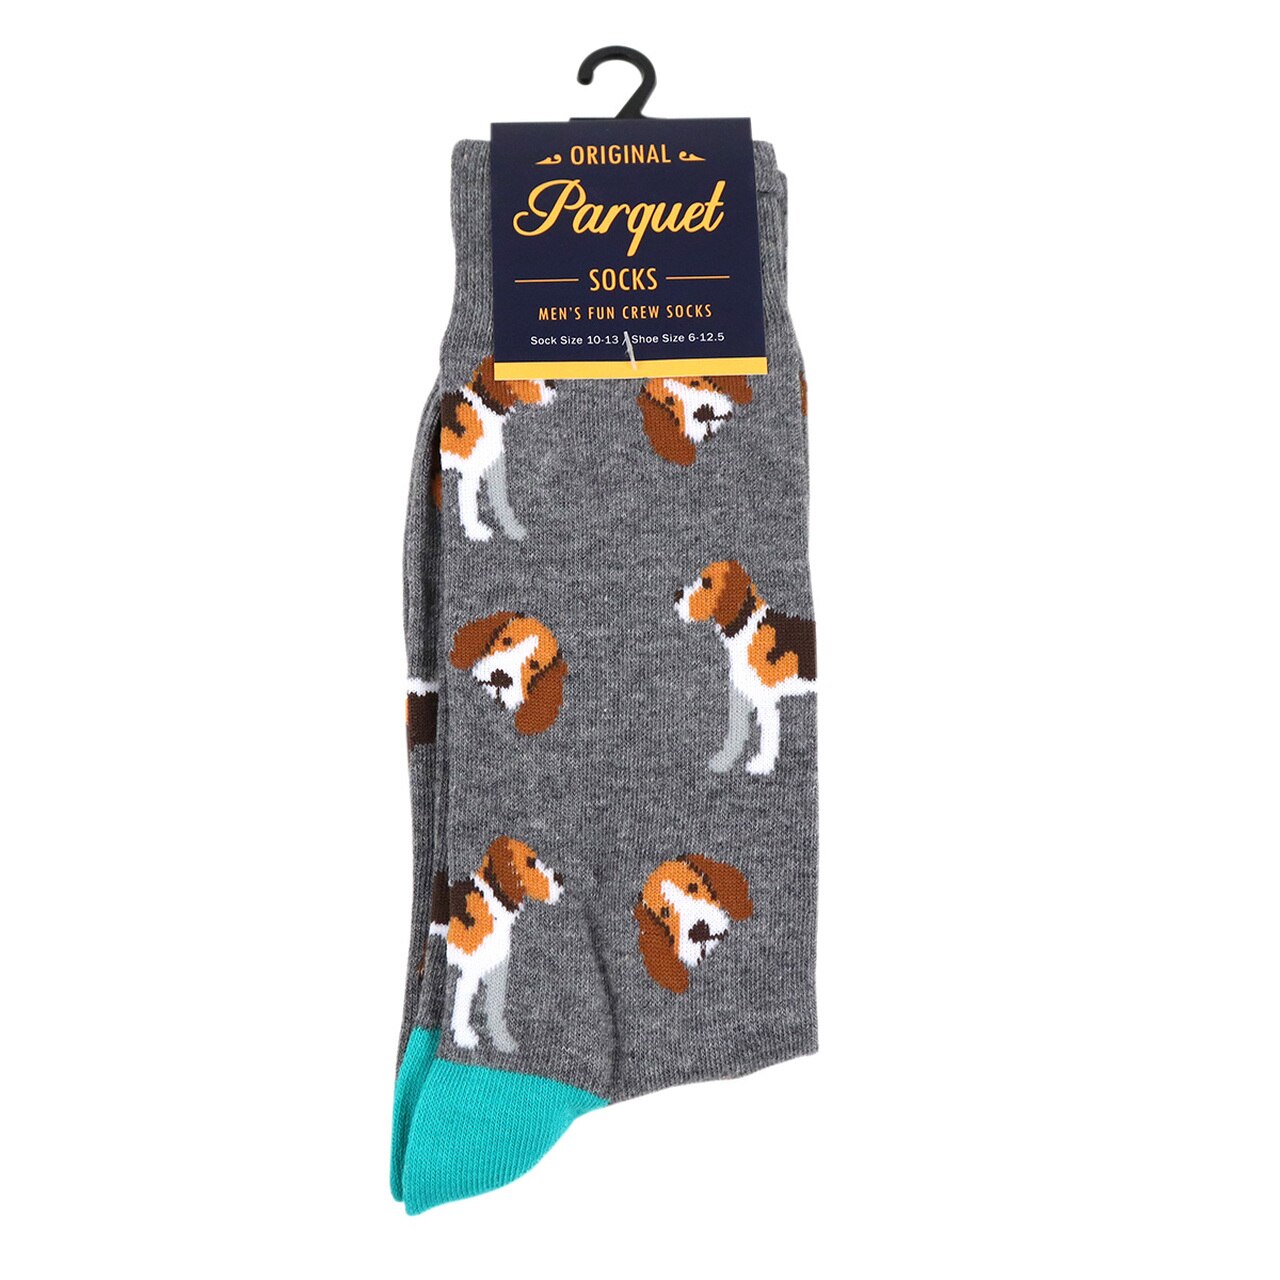 Men's Beagle Socks